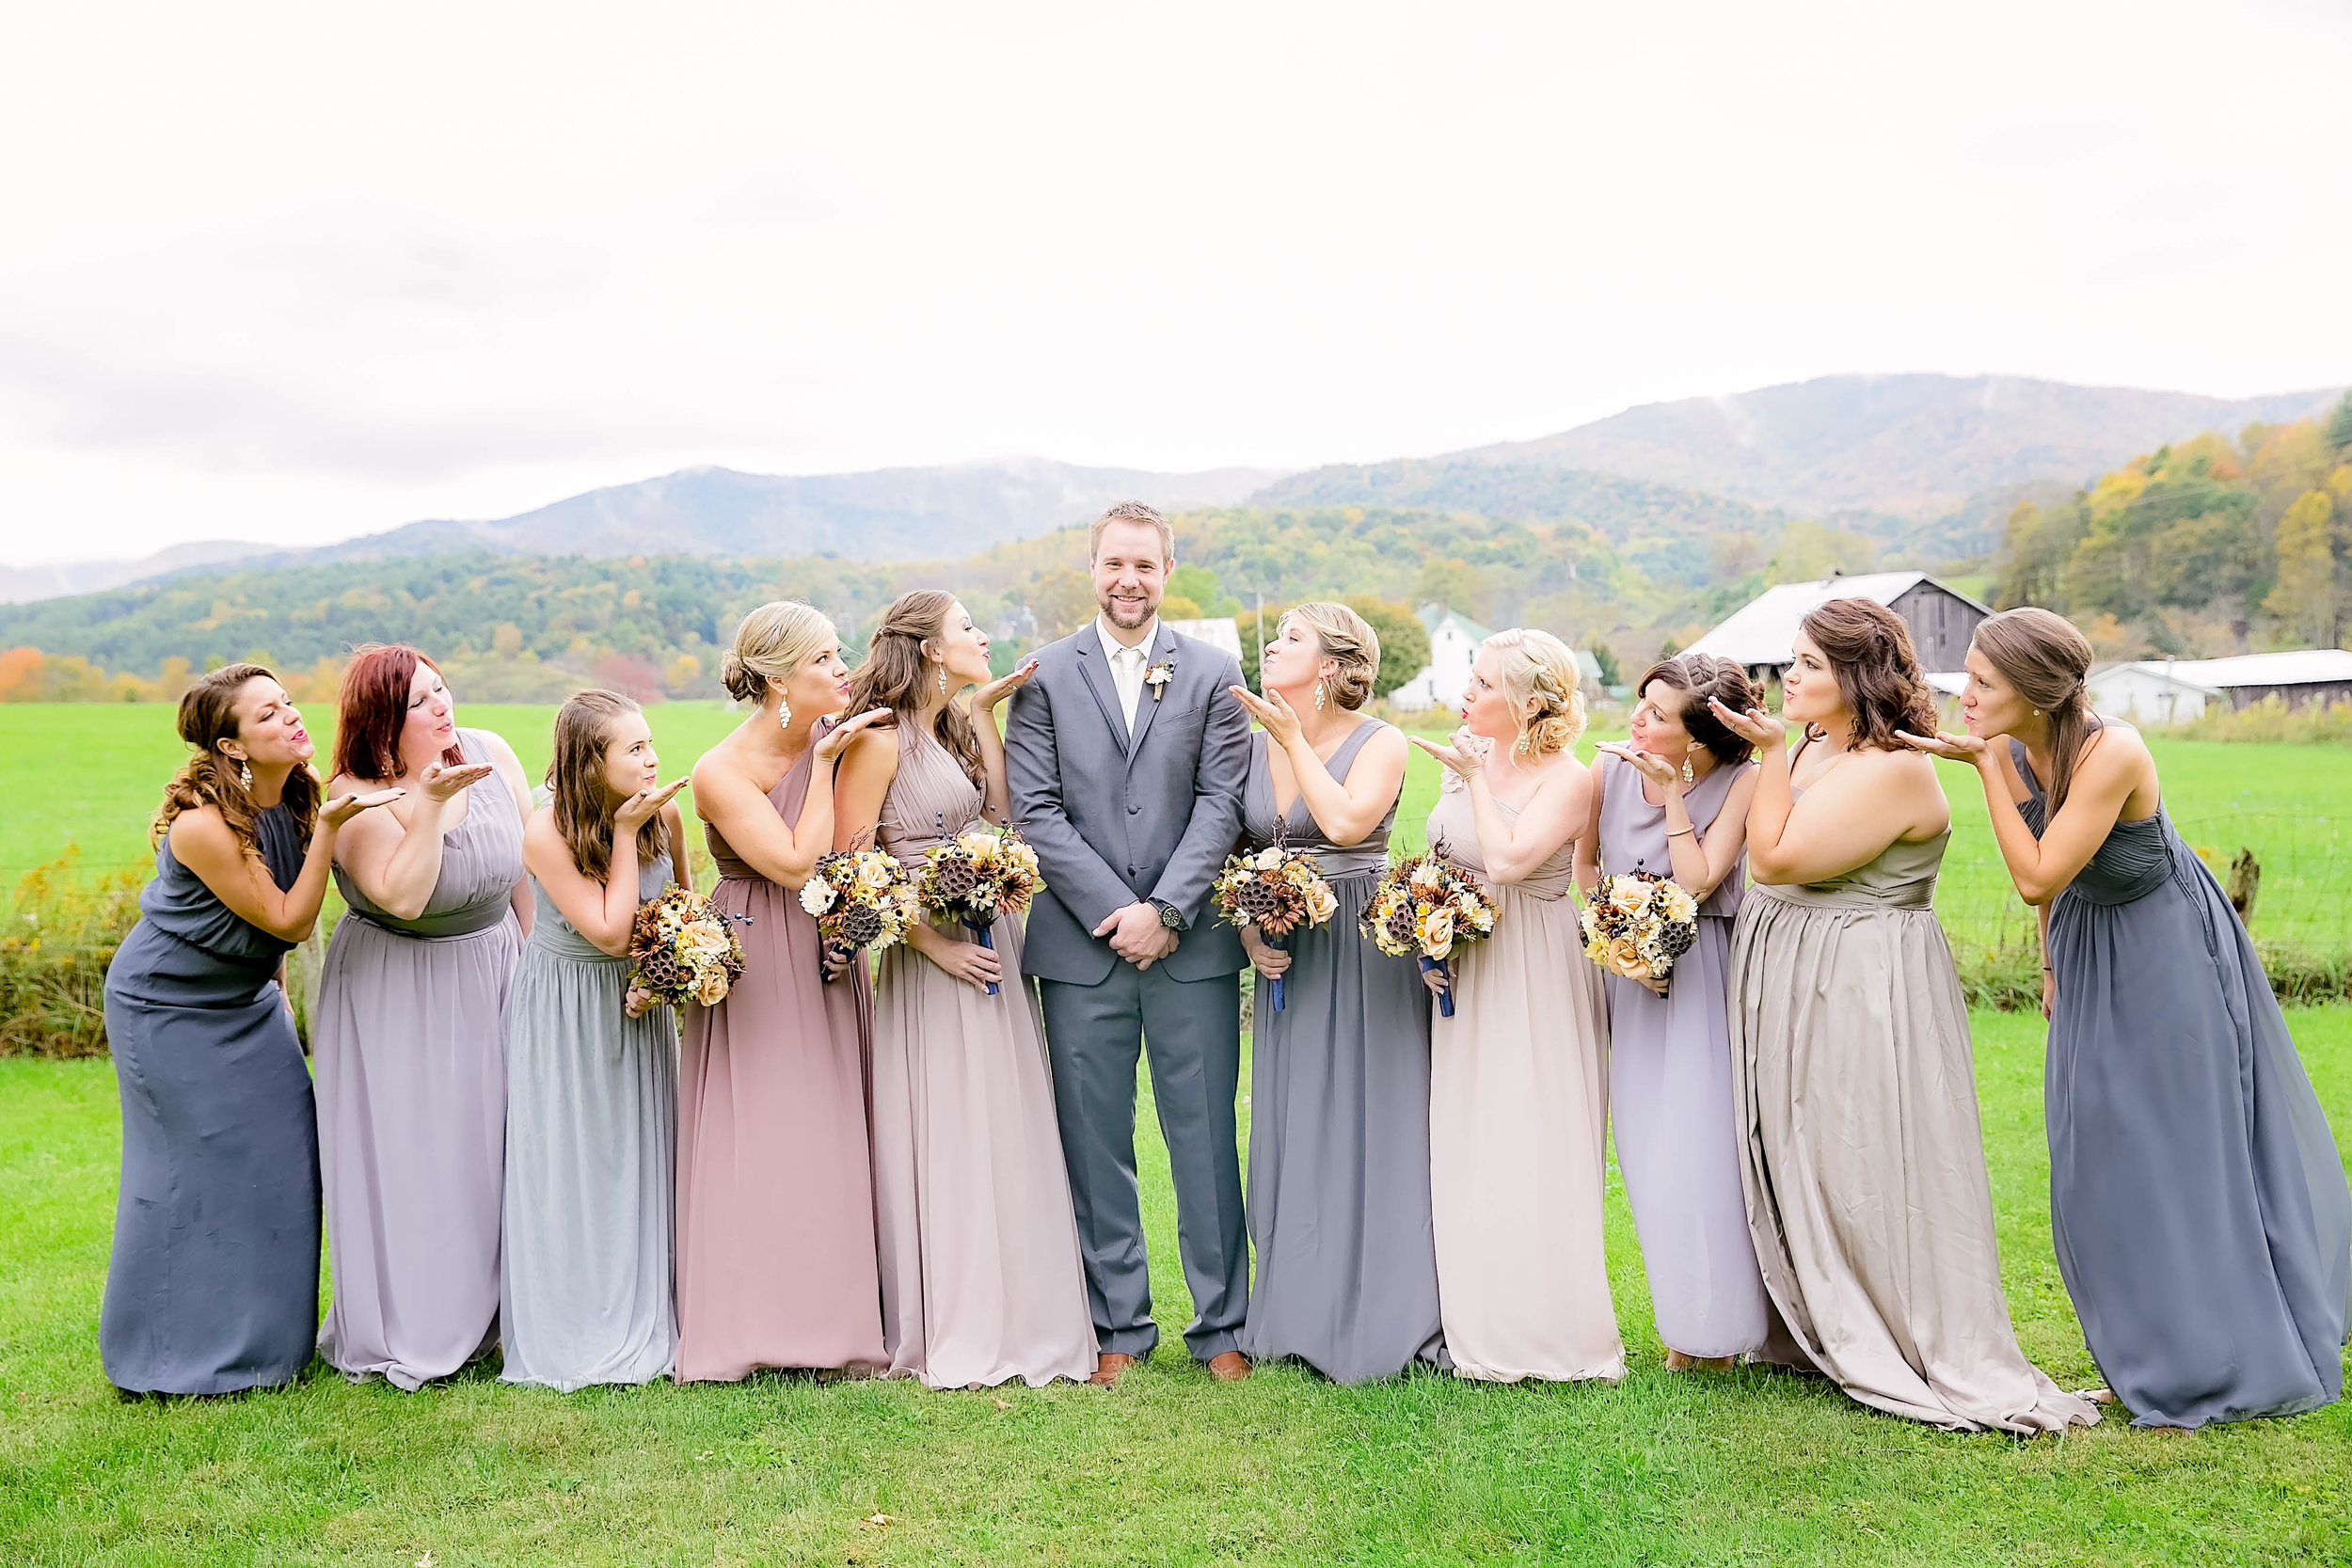 Mountain City, TN farm wedding, East Tennessee fall wedding, Tri Cities Wedding, bridal party, wedding party